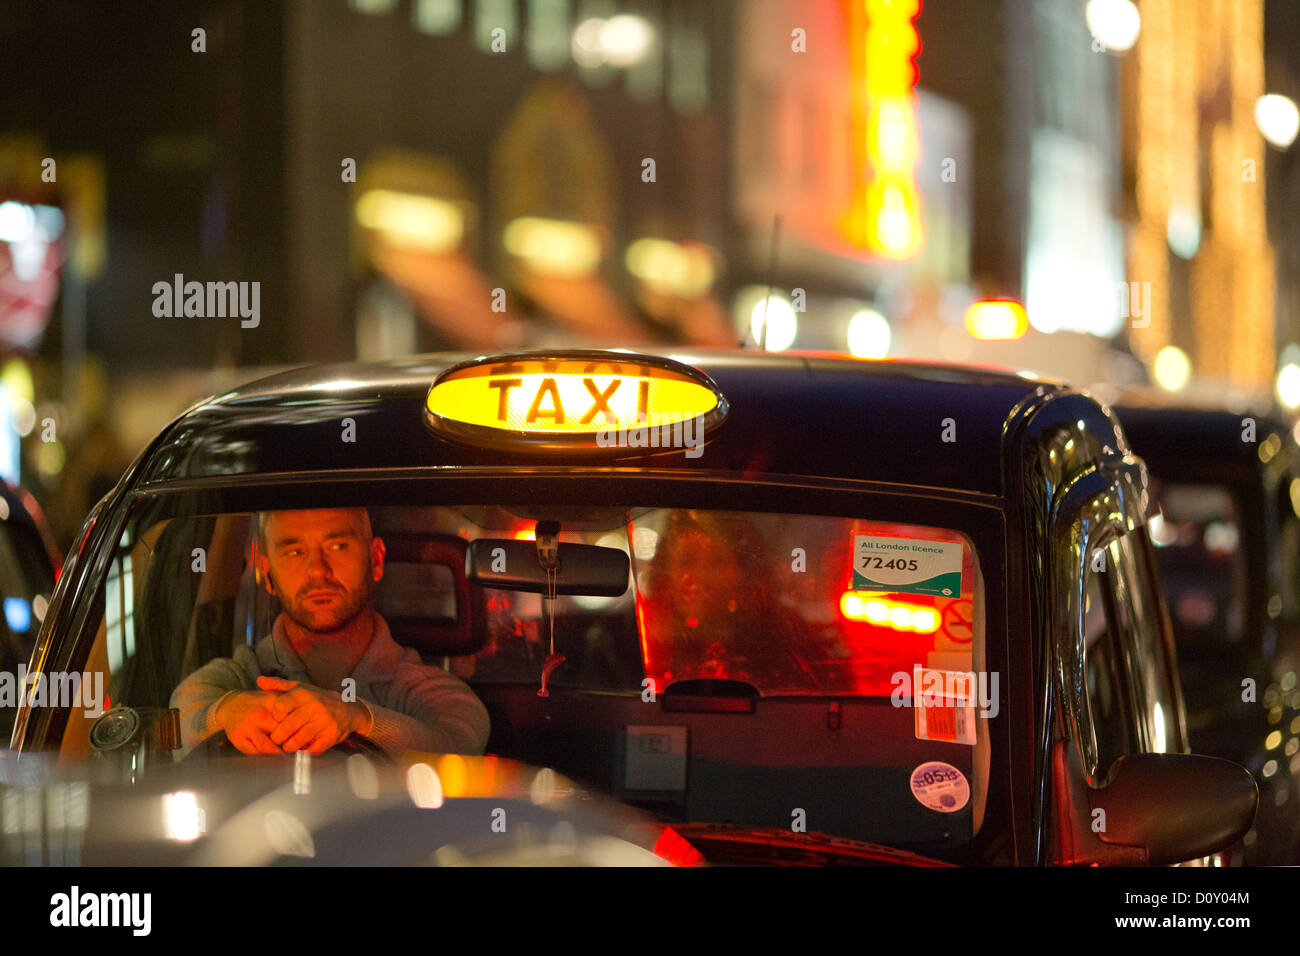 London black taxi cab. Stock Photo